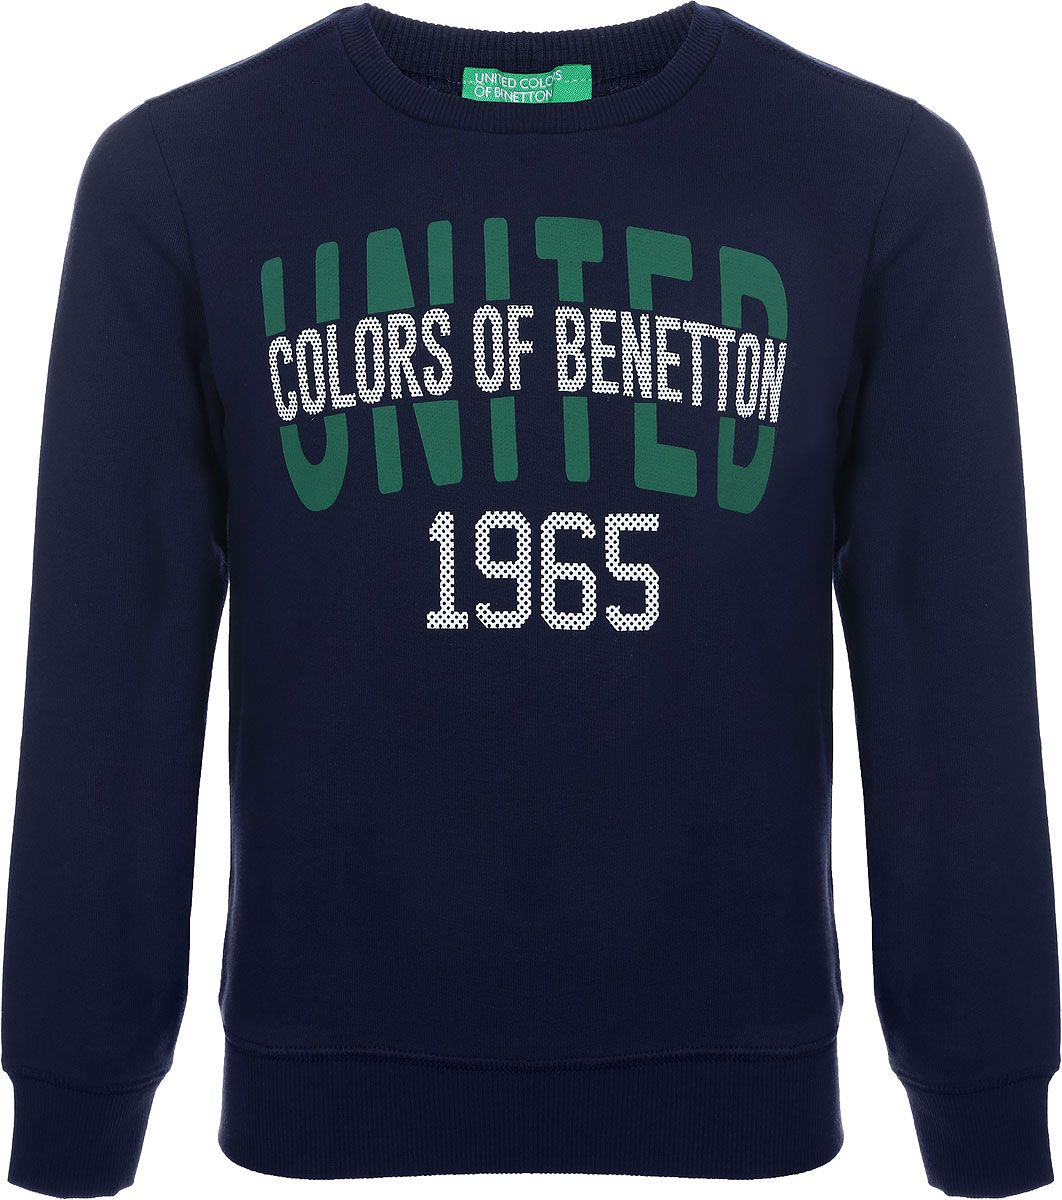    United Colors of Benetton, : -. 3J68C13ZU_13C.  XXL (160)